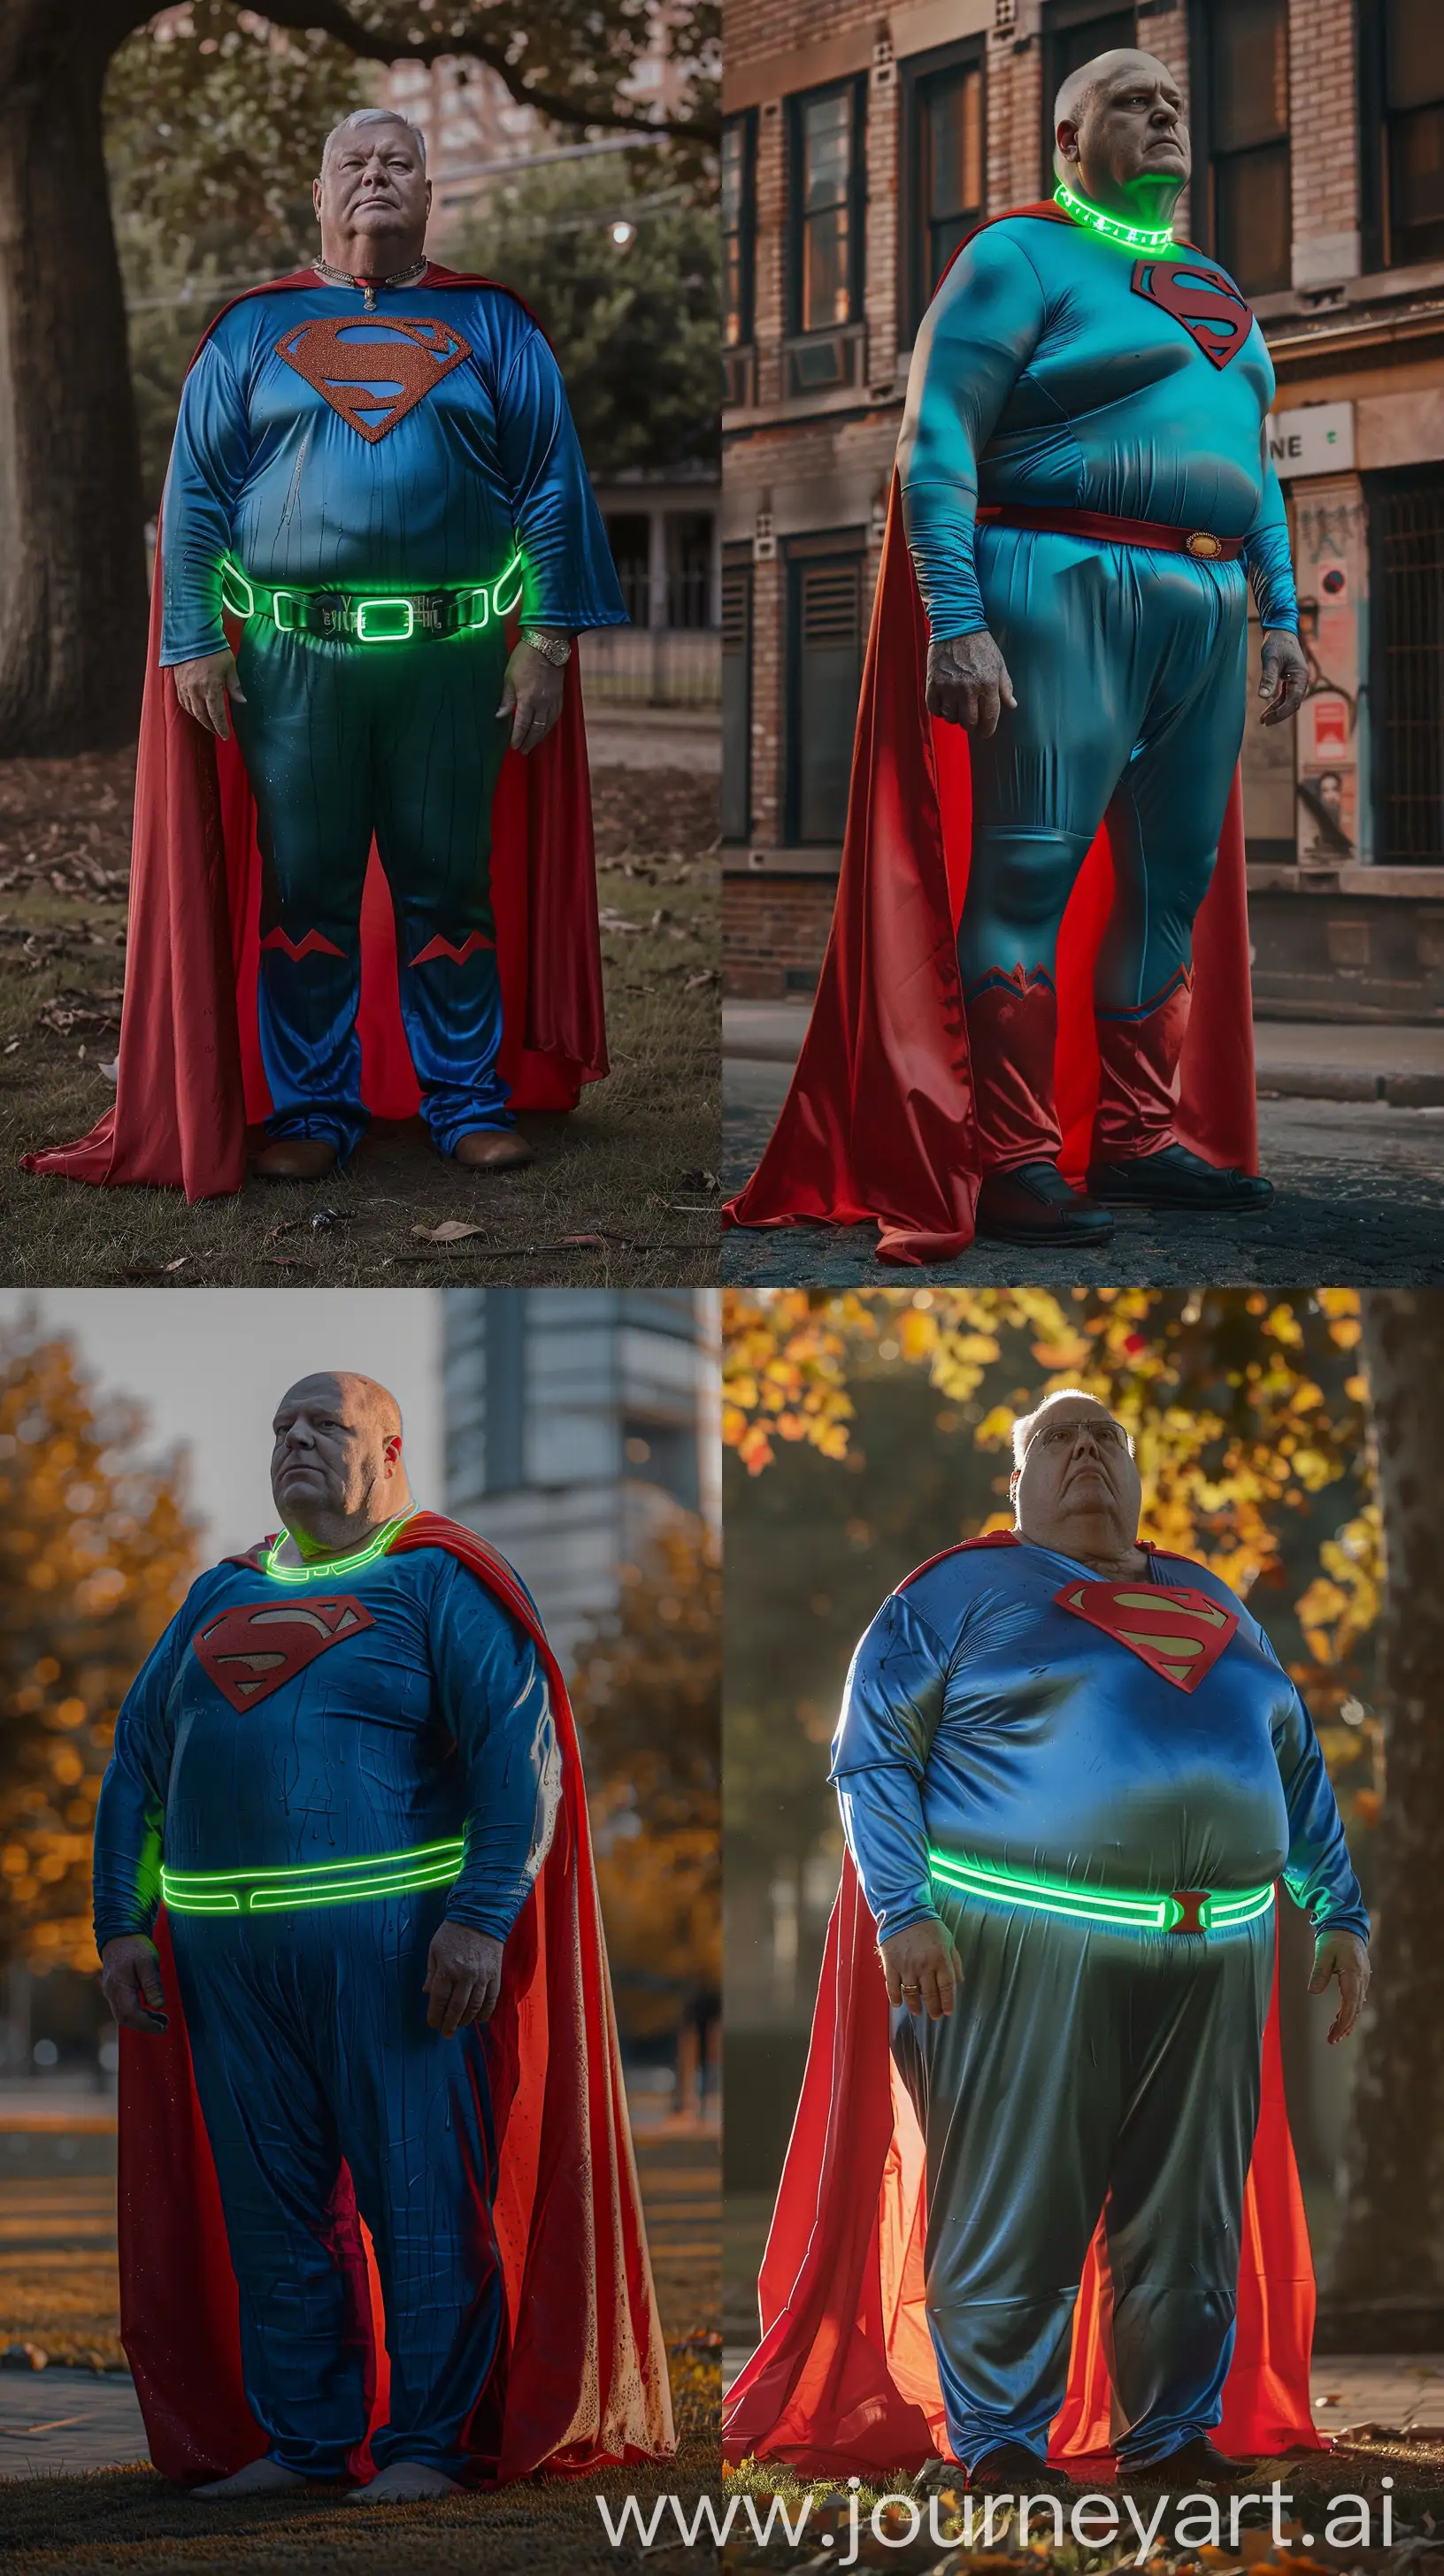 Elderly-Superman-Enjoys-Outdoor-Adventure-in-Vibrant-Neon-Costume